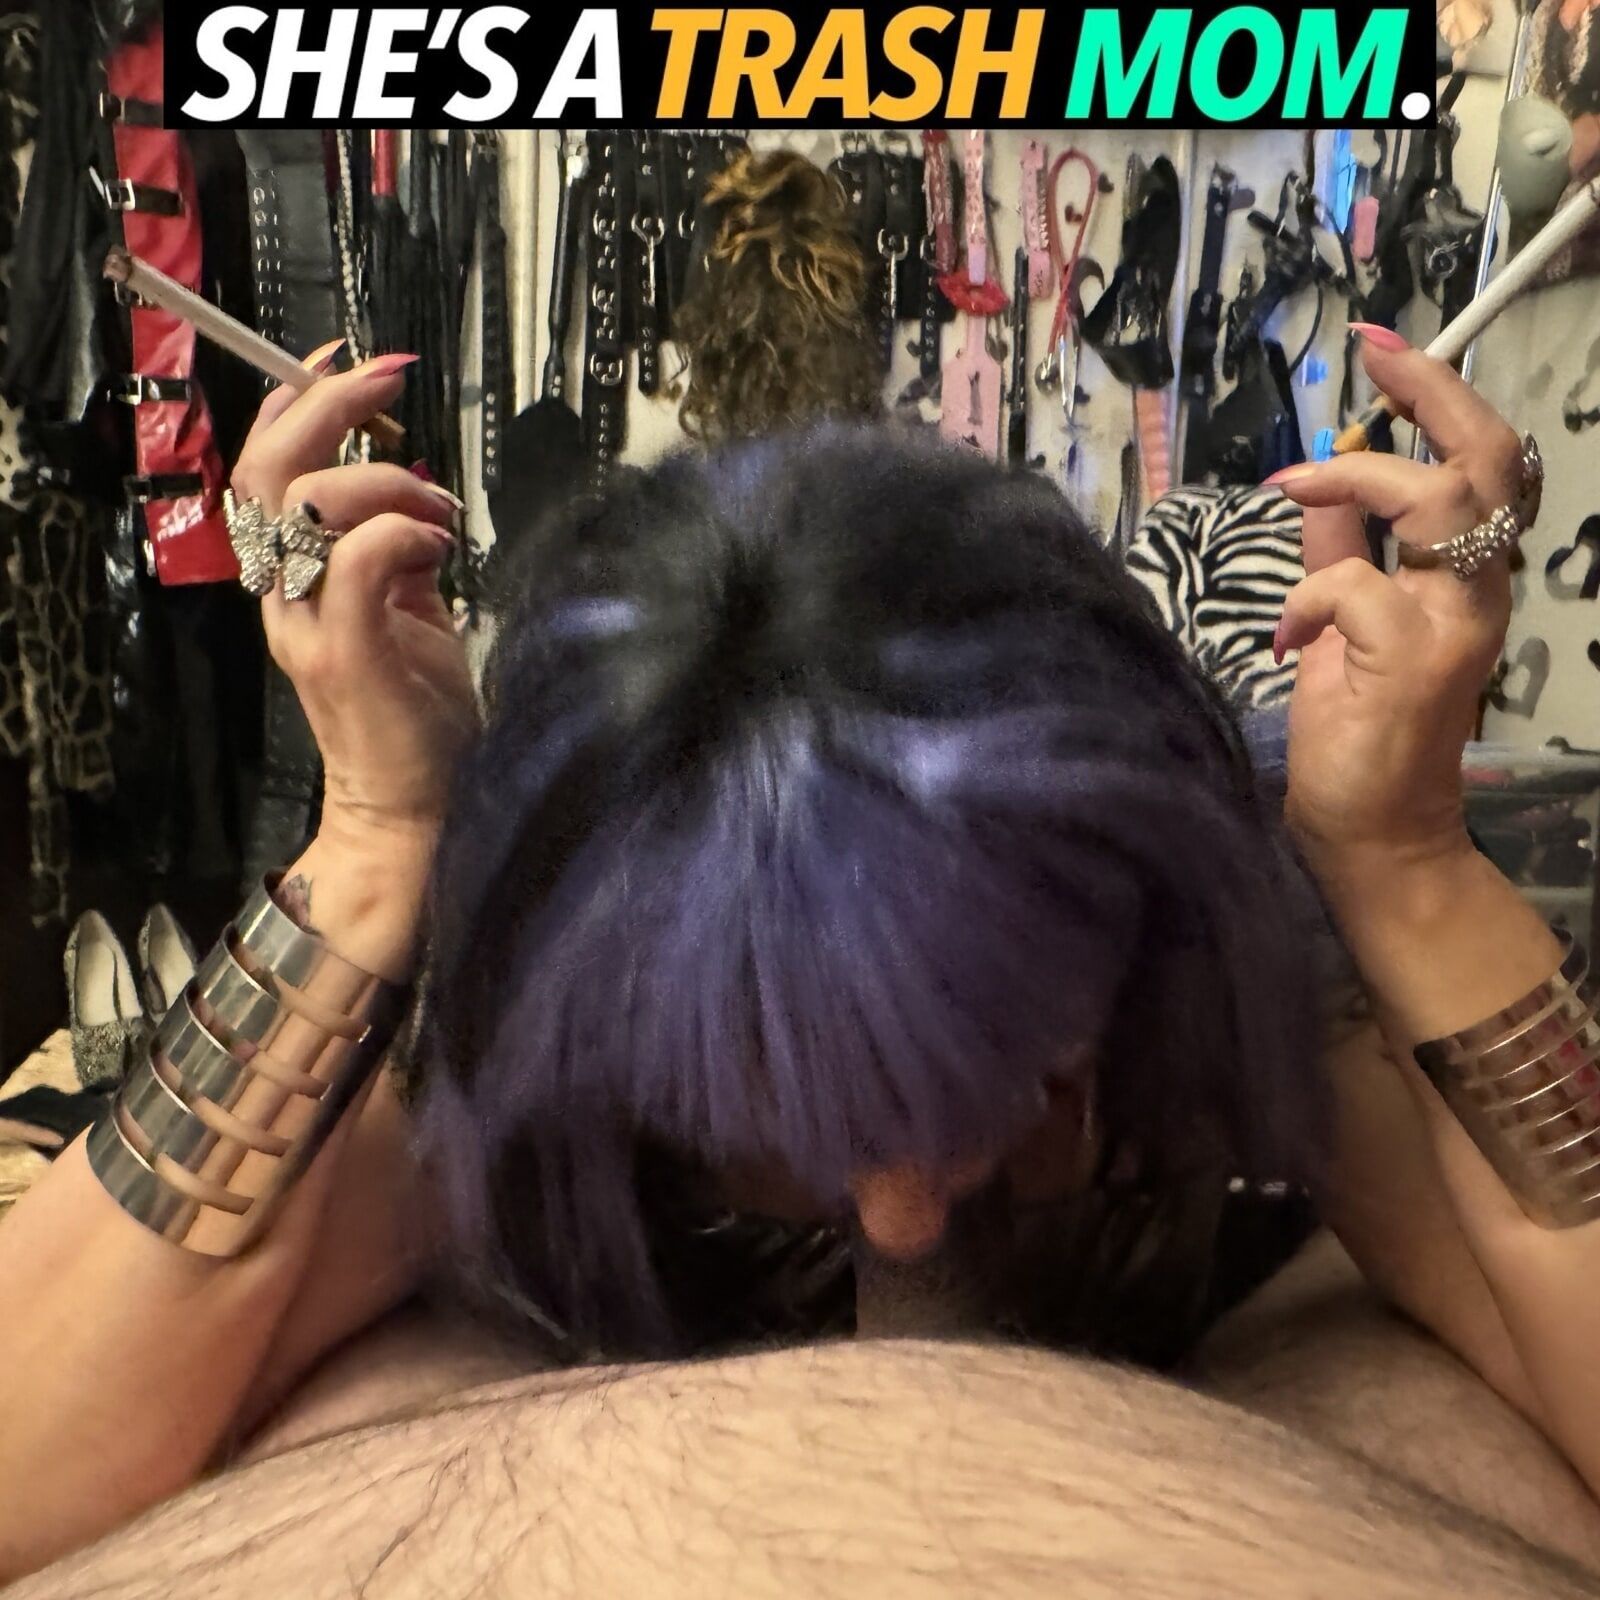 SHIRLEY TRASH MOM #33